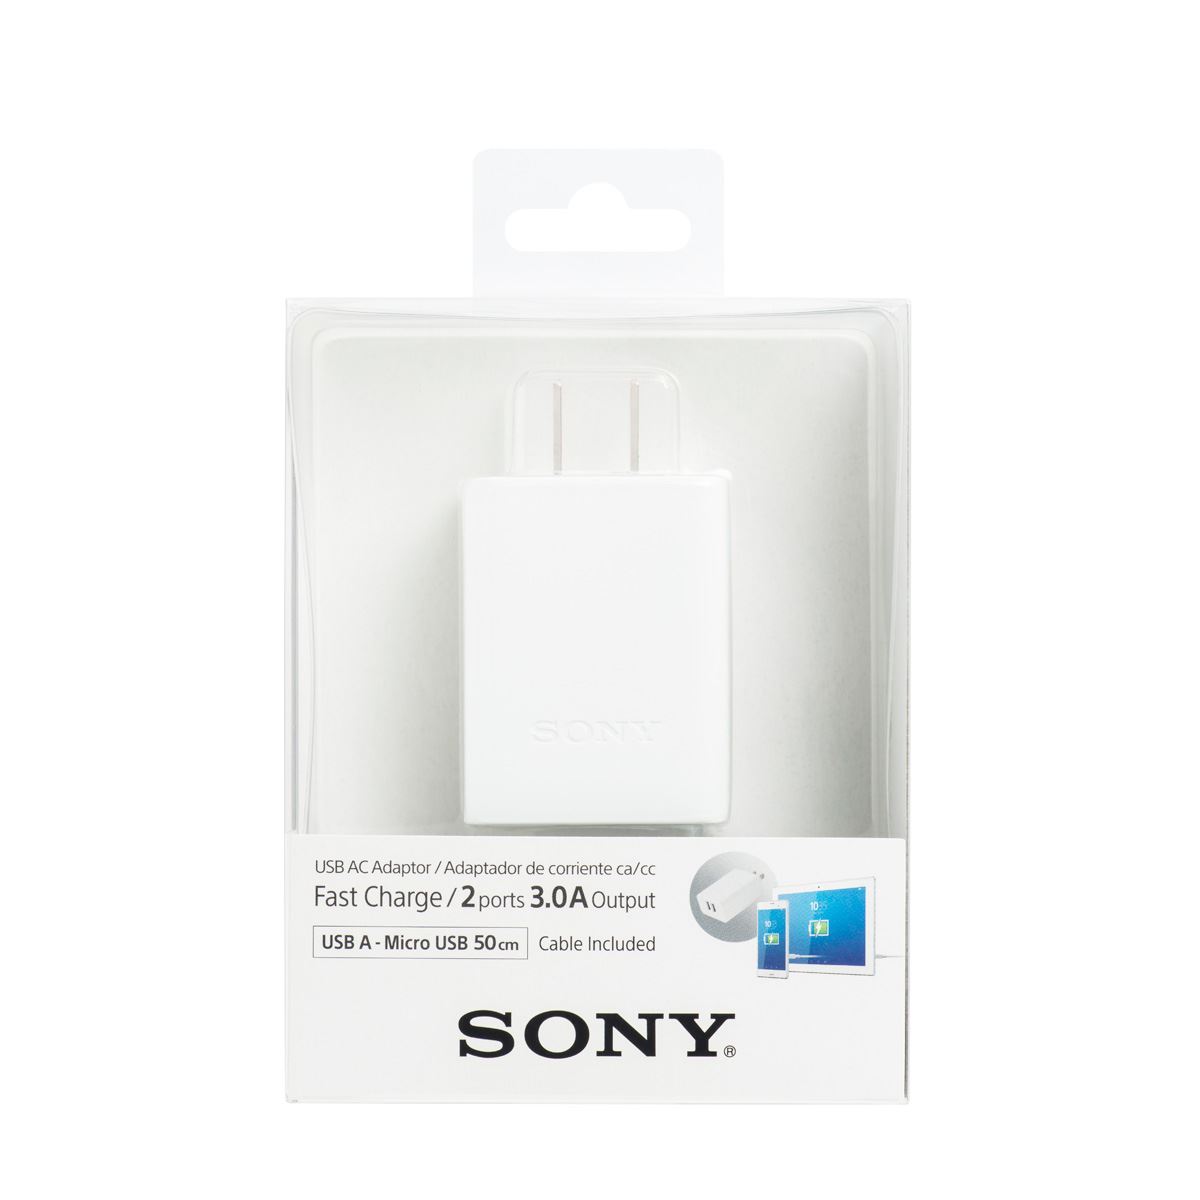 Adaptador AC Sony USB 3.0A 2 Puertos